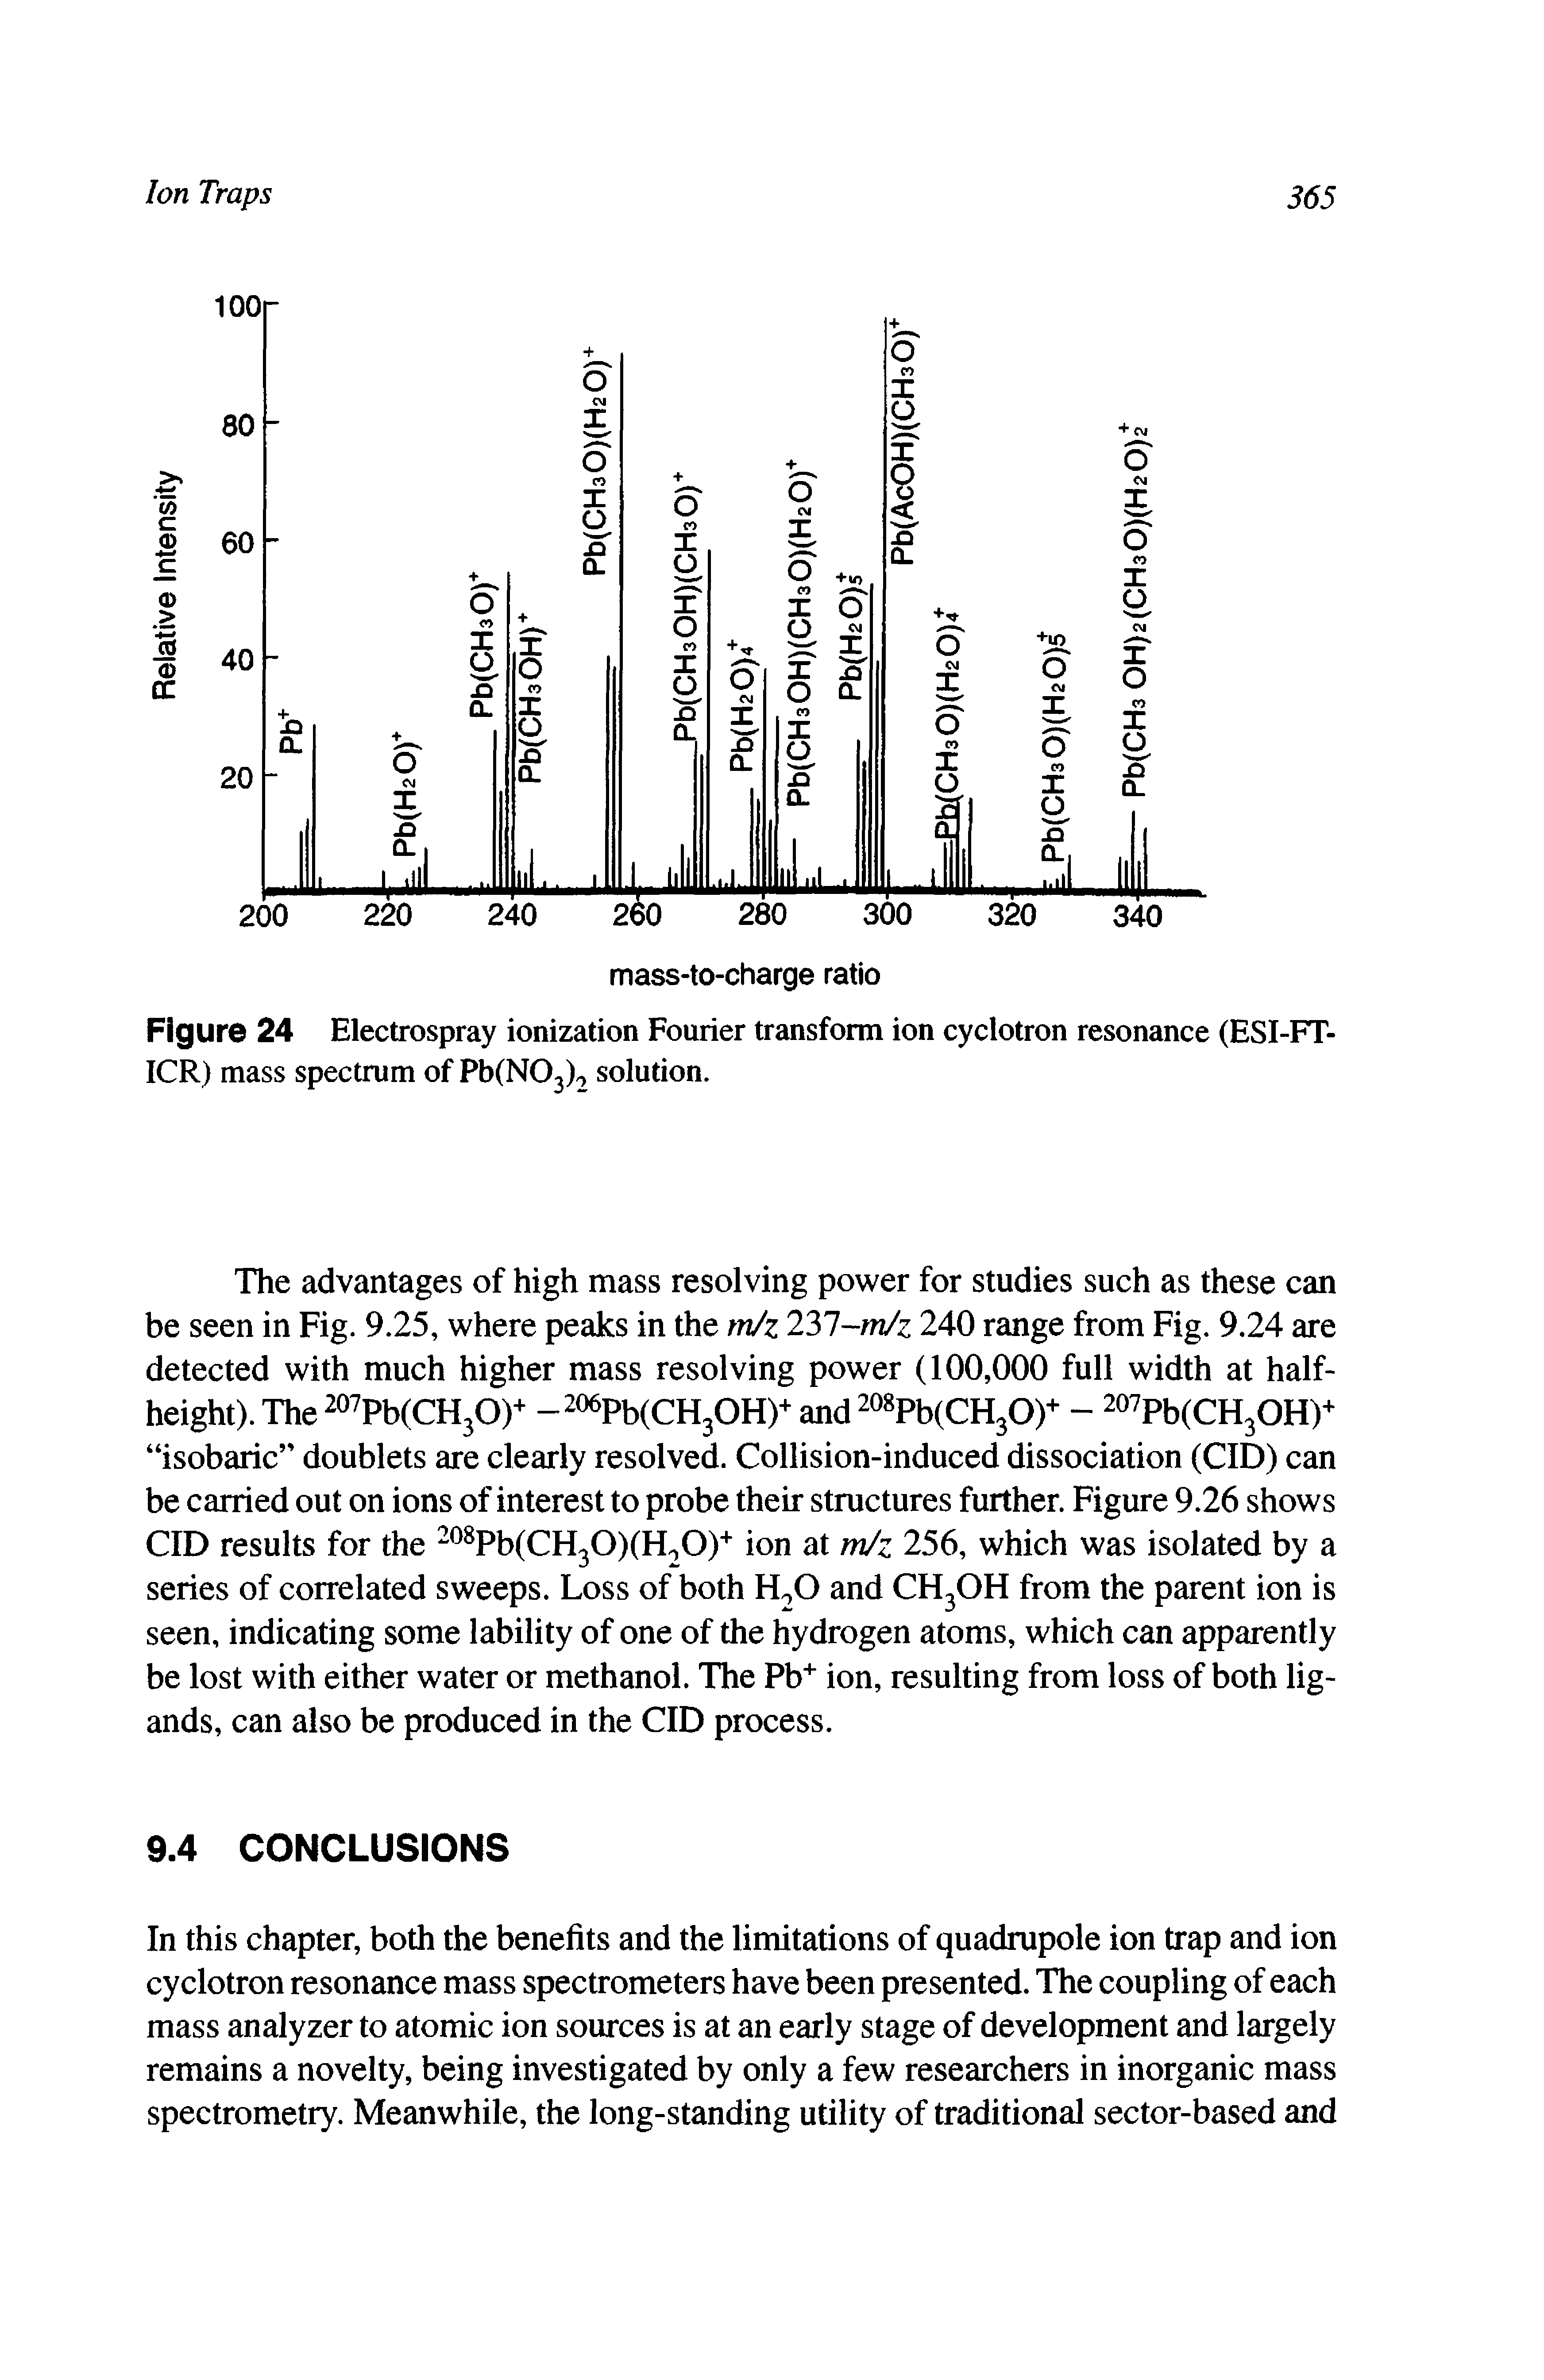 Figure 24 Electrospray ionization Fourier transform ion cyclotron resonance (ESI-FT-ICR) mass spectrum of Pb(N03)2 solution.